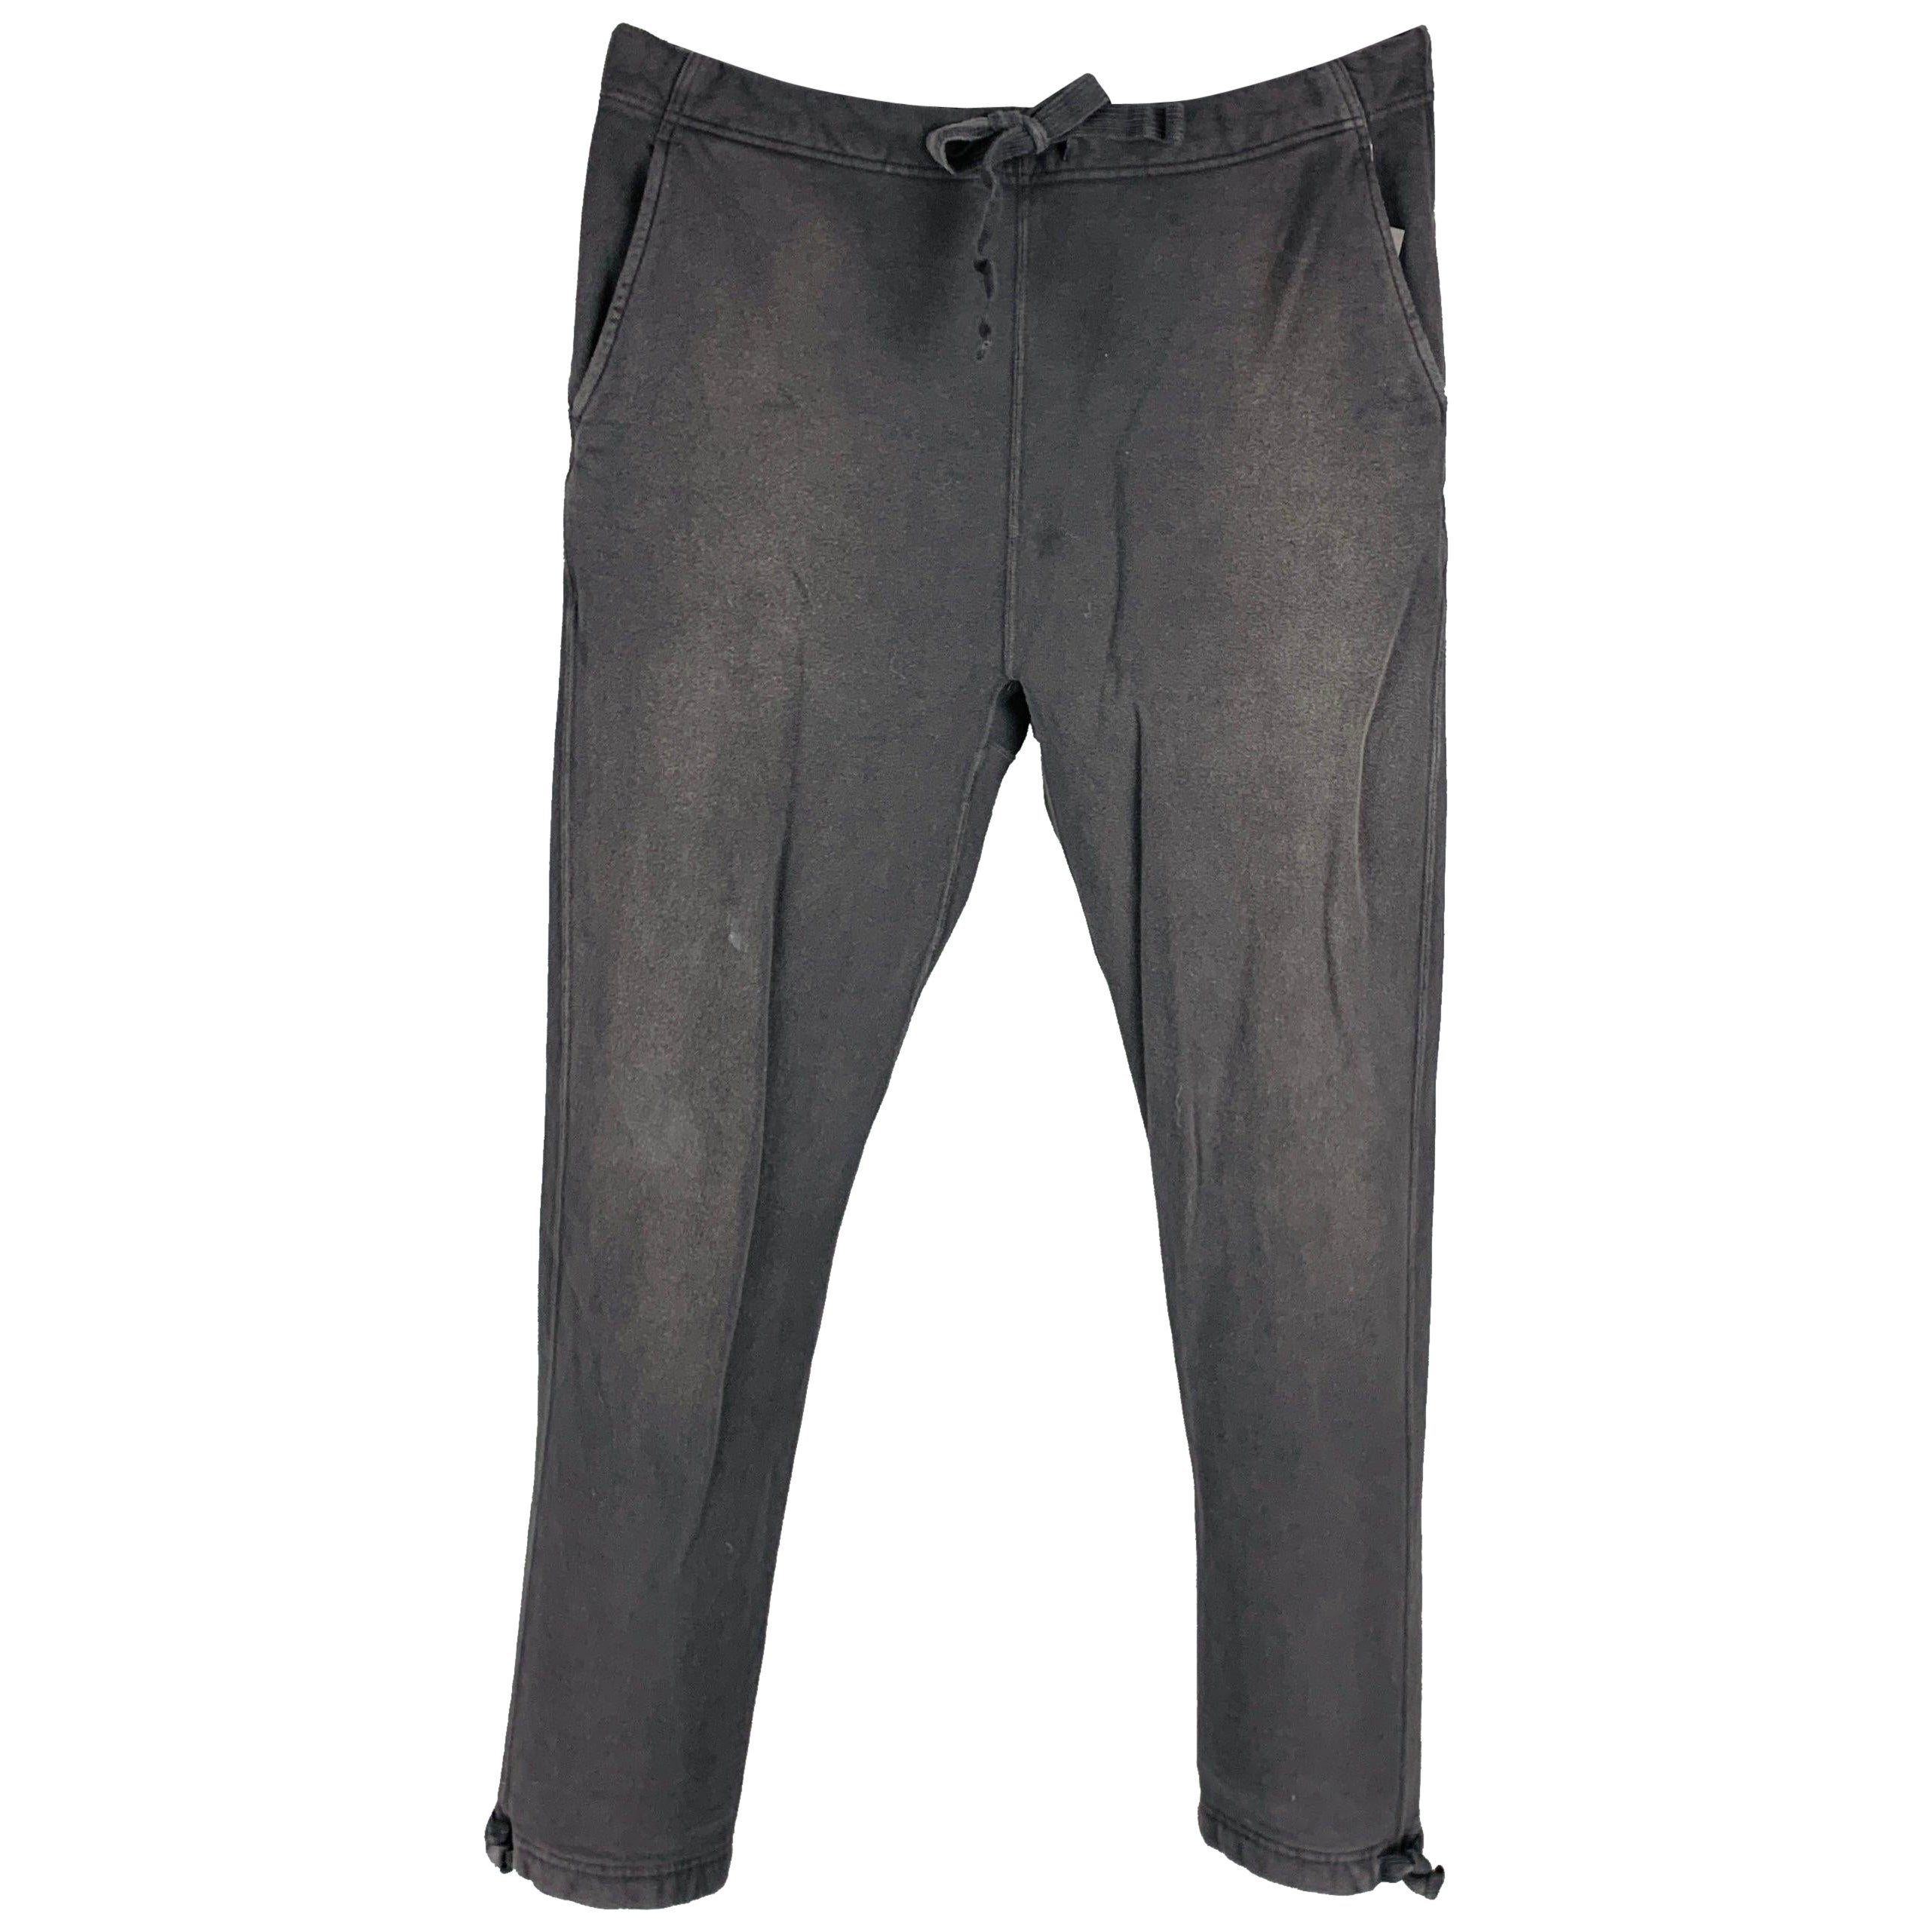 VISVIM -Sweat Pants DMGD- Size S Black Wash Cotton Drawstring Casual Pants For Sale